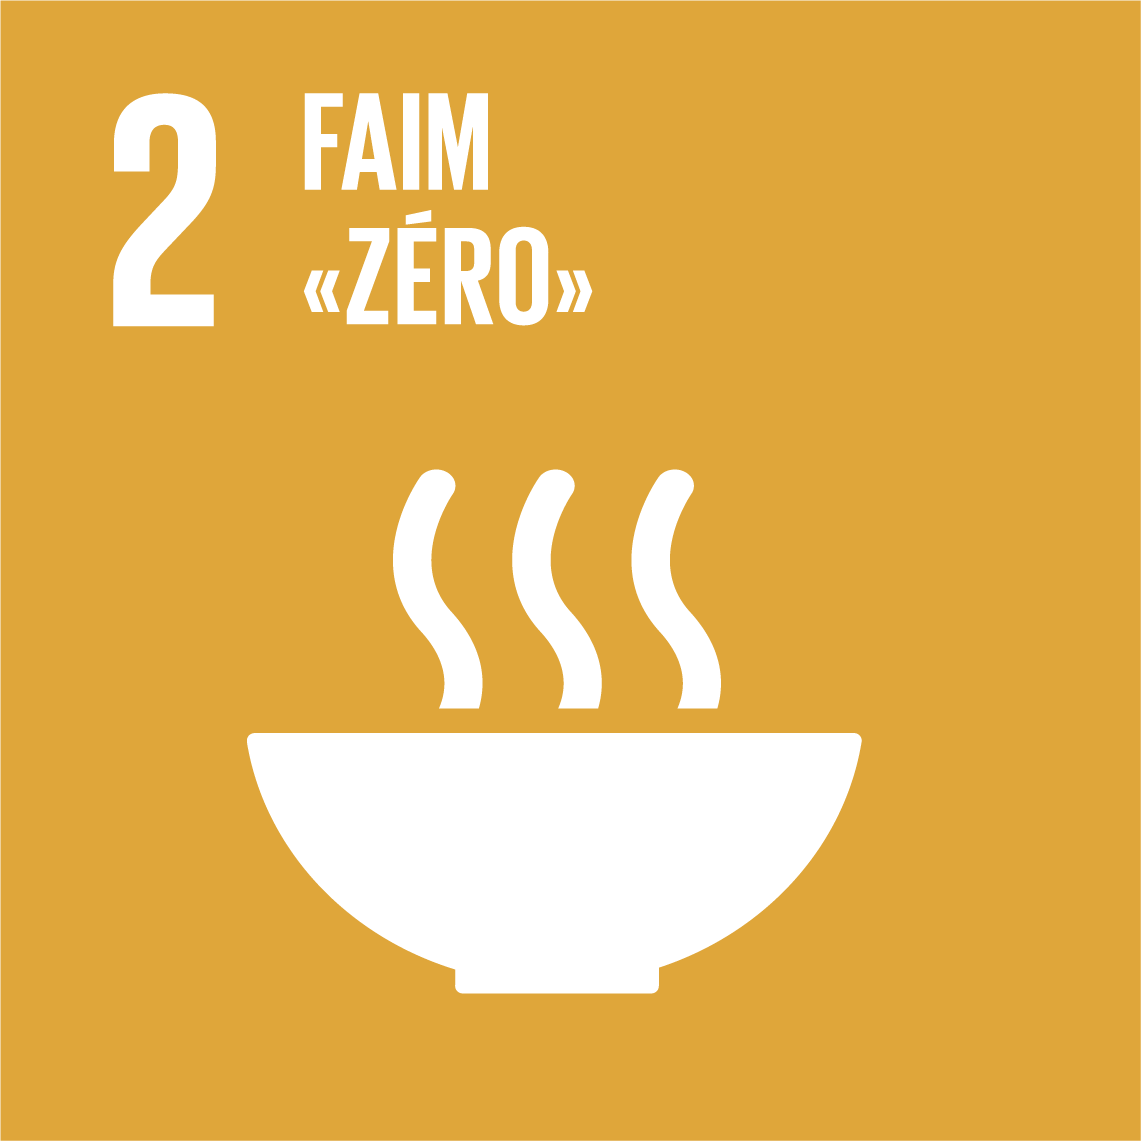 Sustainable Development Goals 2 - Zero hunger